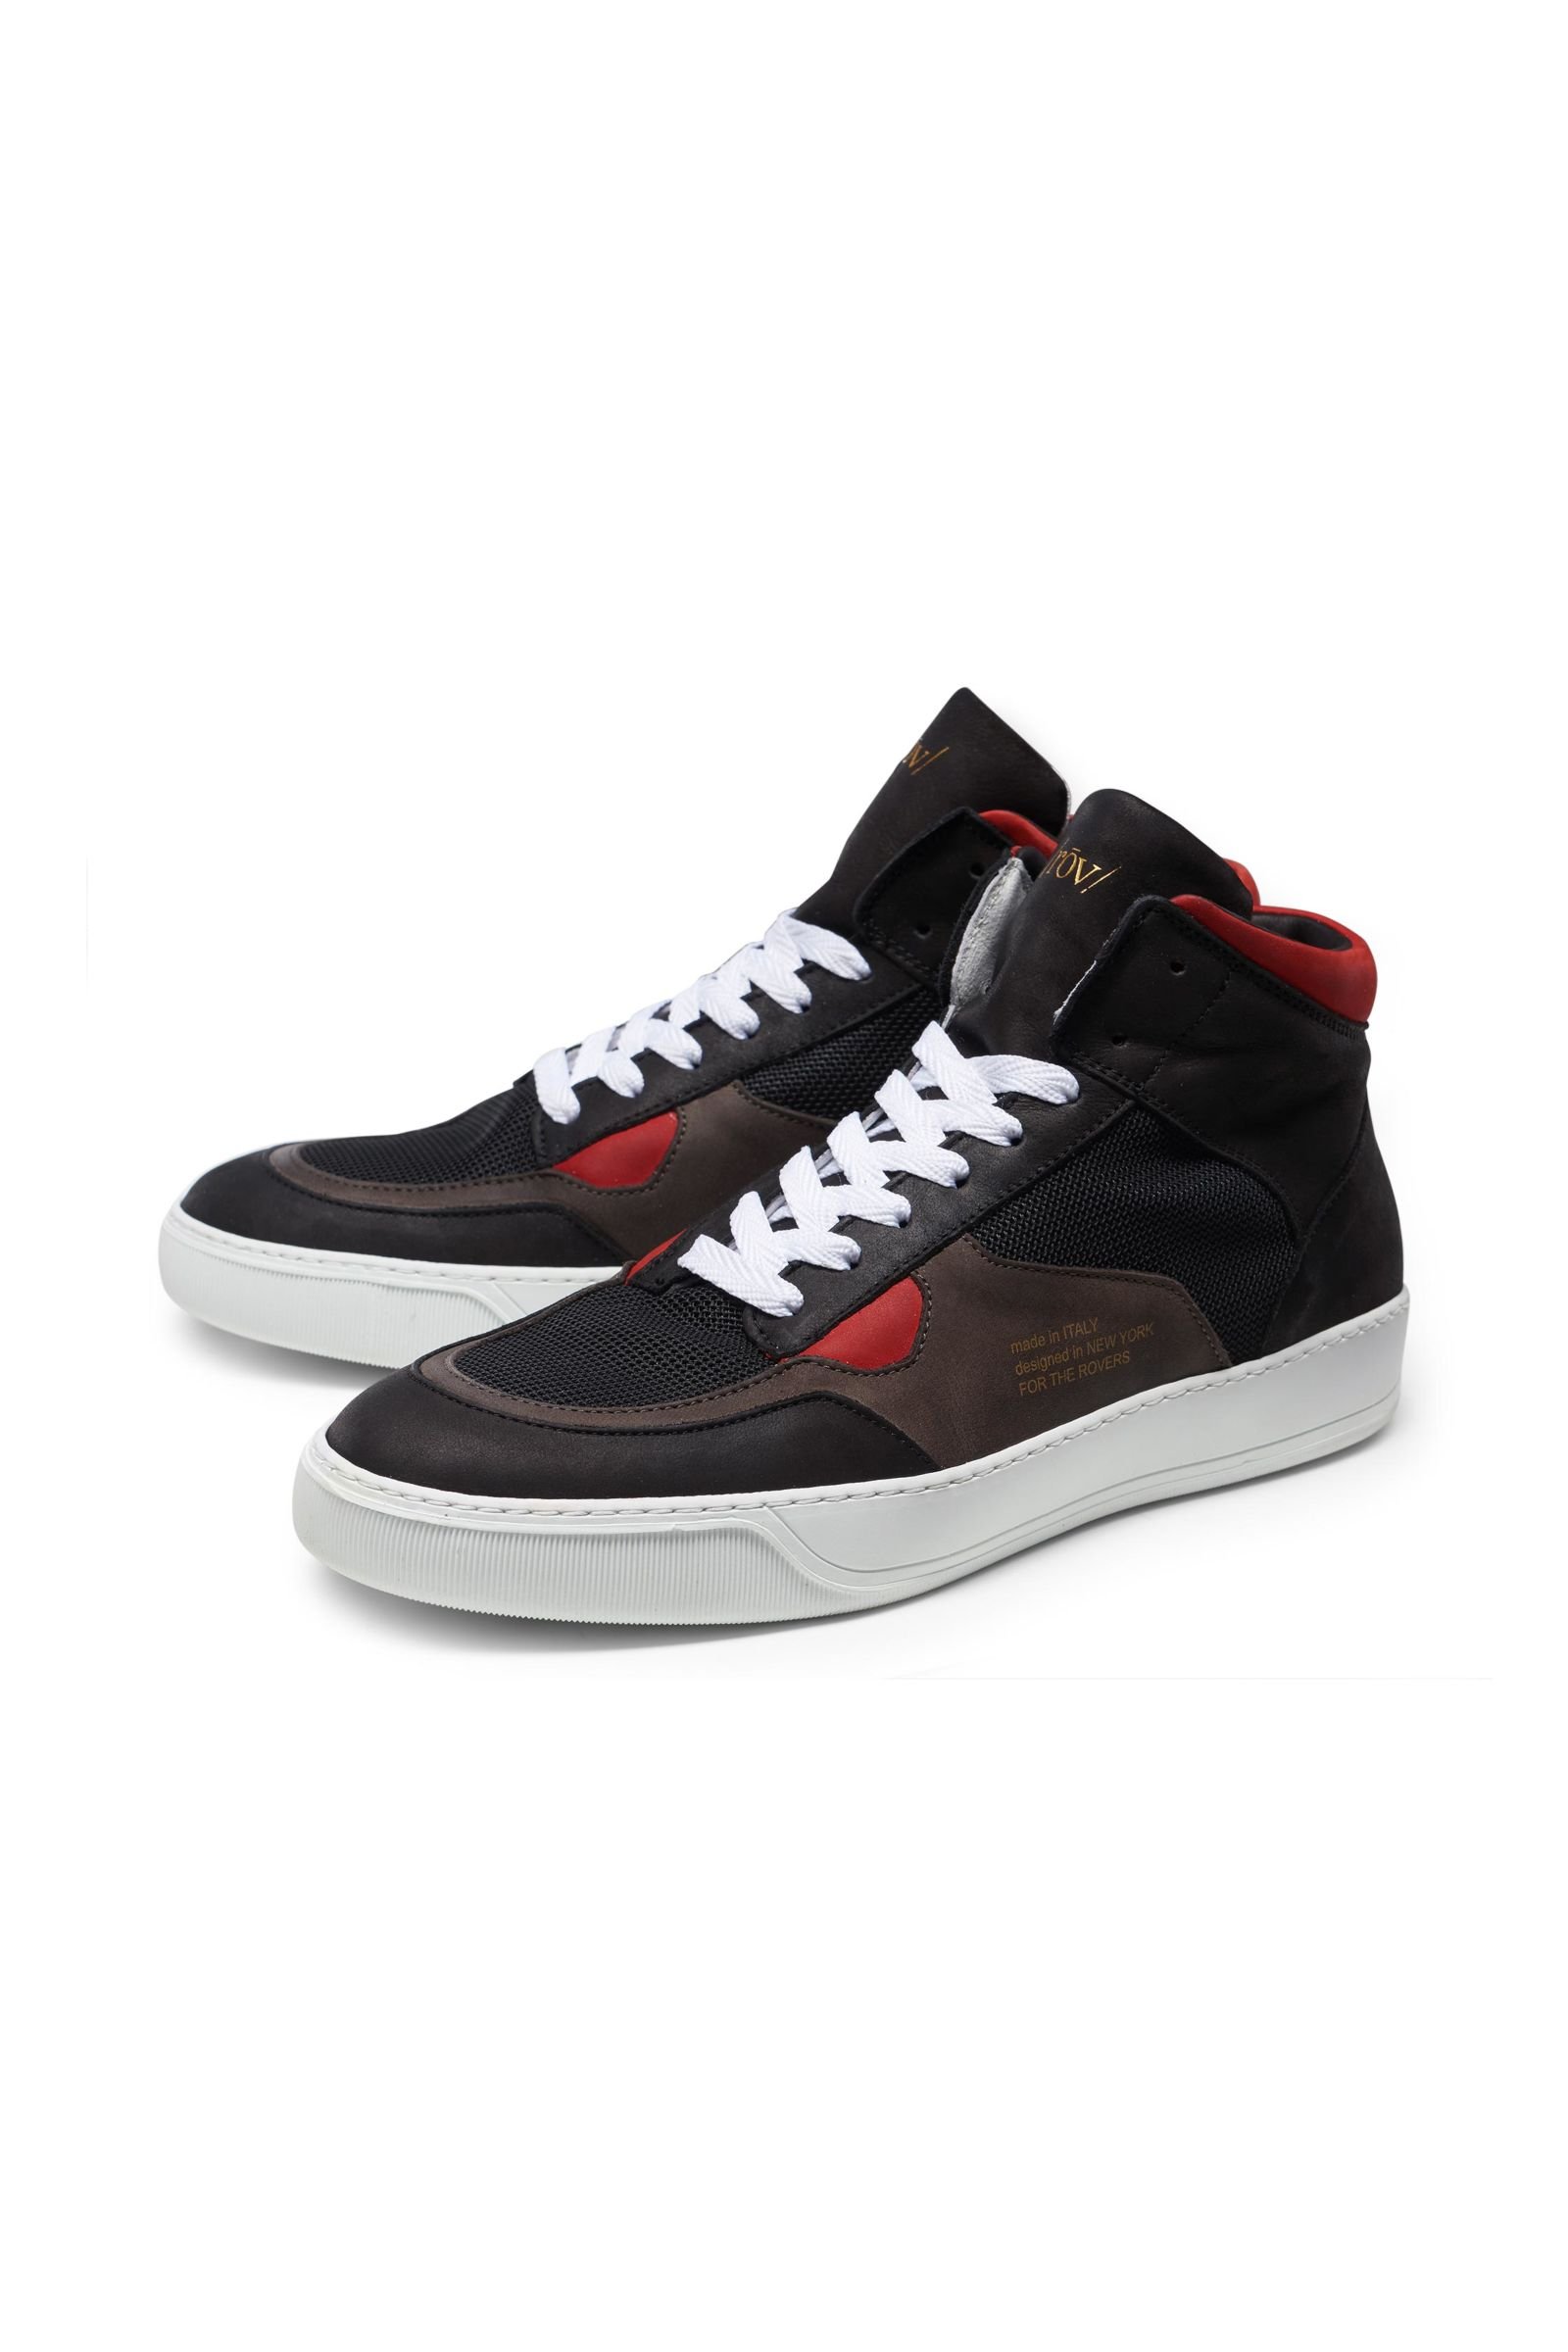 Sneaker 'Play Top Fashion 6' schwarz/rot